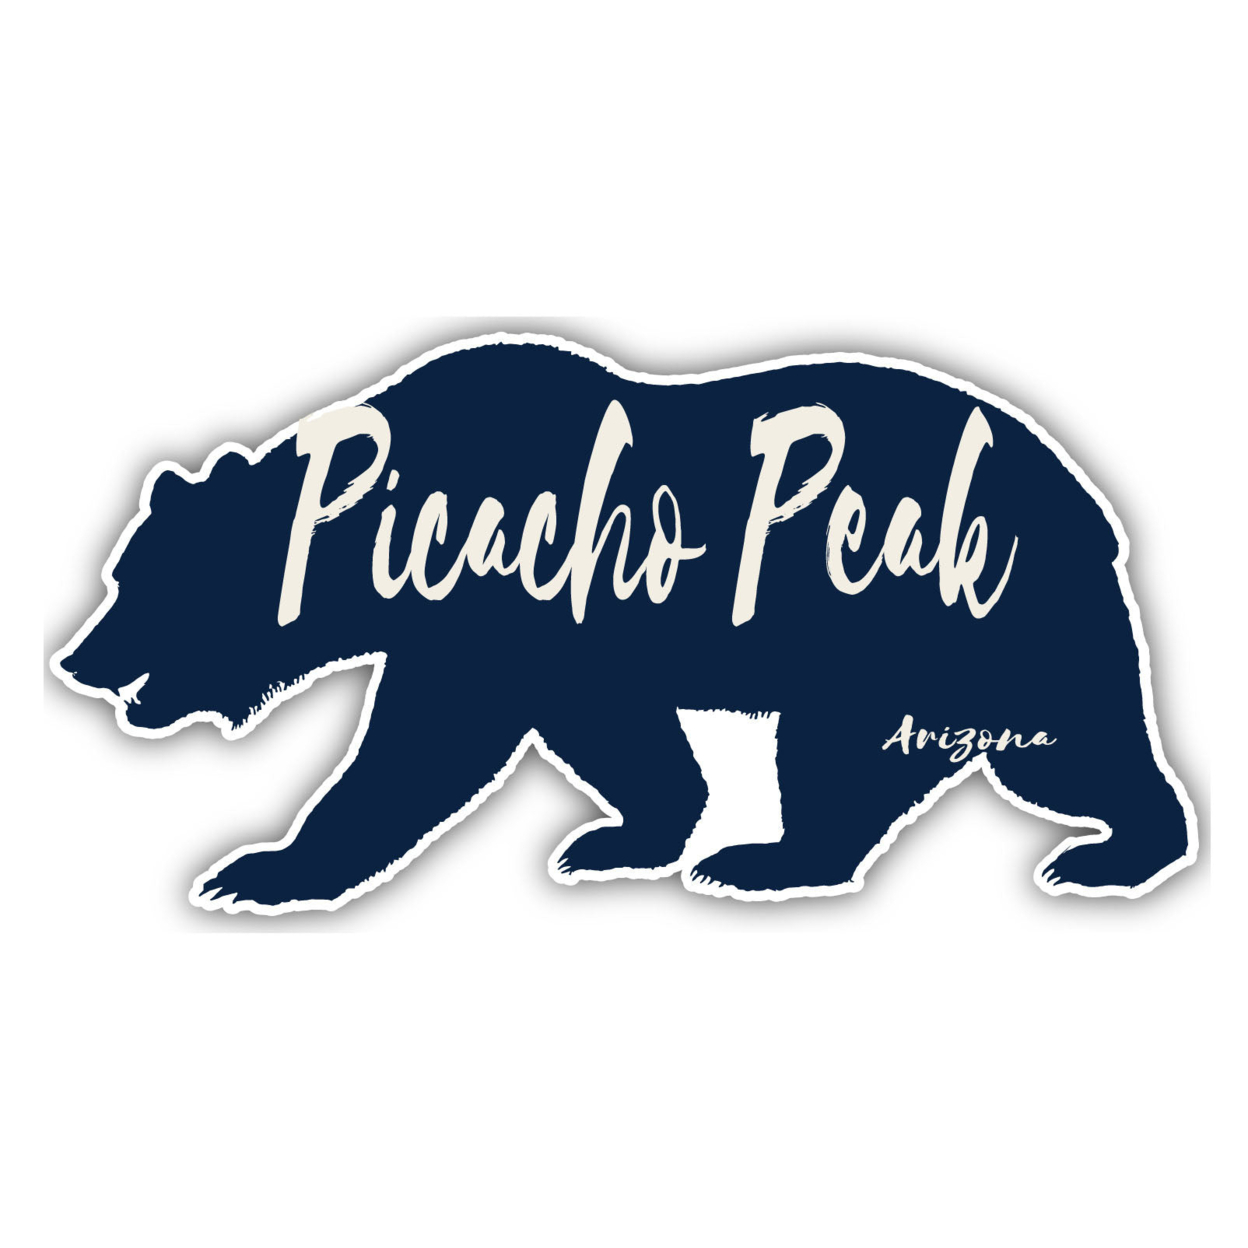 Picacho Peak Arizona Souvenir Decorative Stickers (Choose Theme And Size) - Single Unit, 2-Inch, Bear